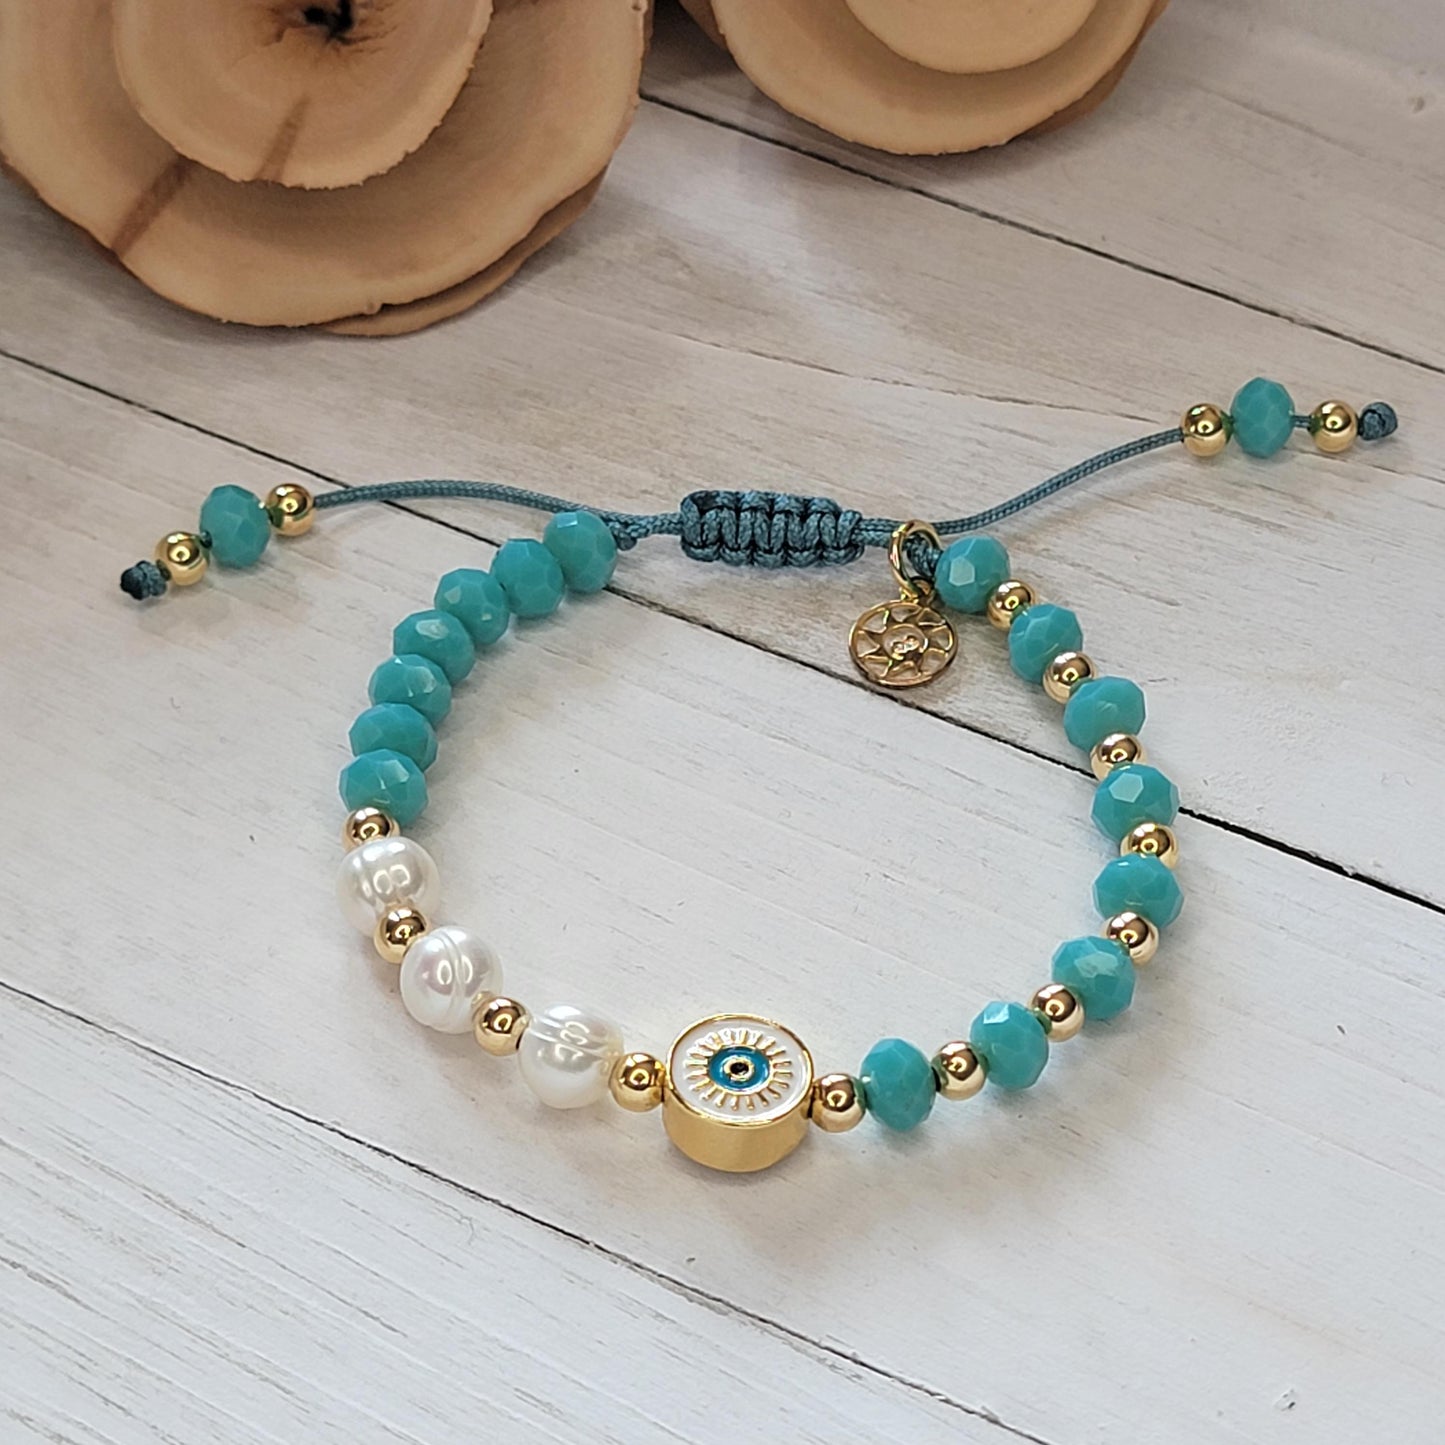 Elegant Protection Bracelet with Pearls, Crystals and 18k Gold-Filled Details